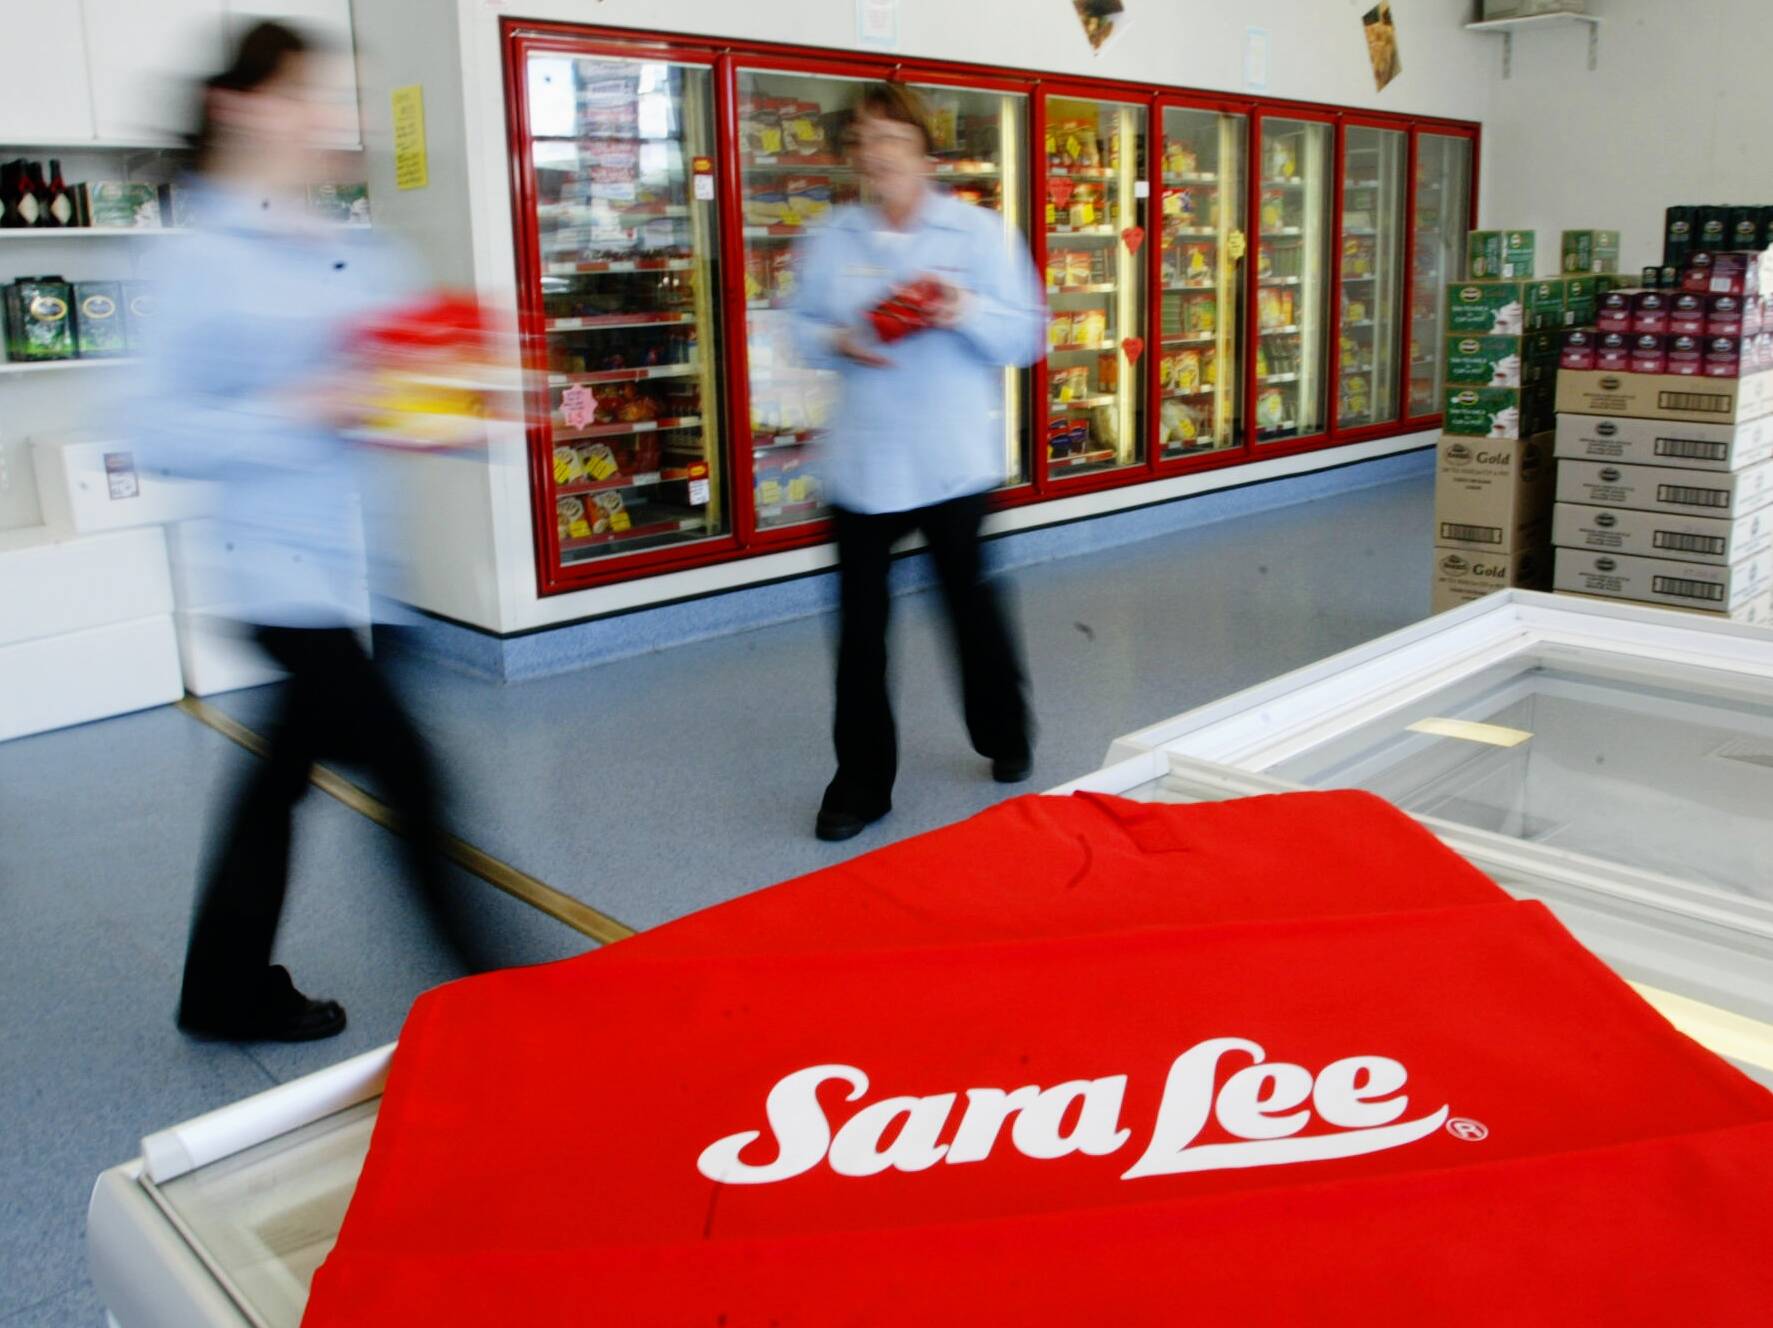 Lisarow, NSW fears loss of Sara Lee factory